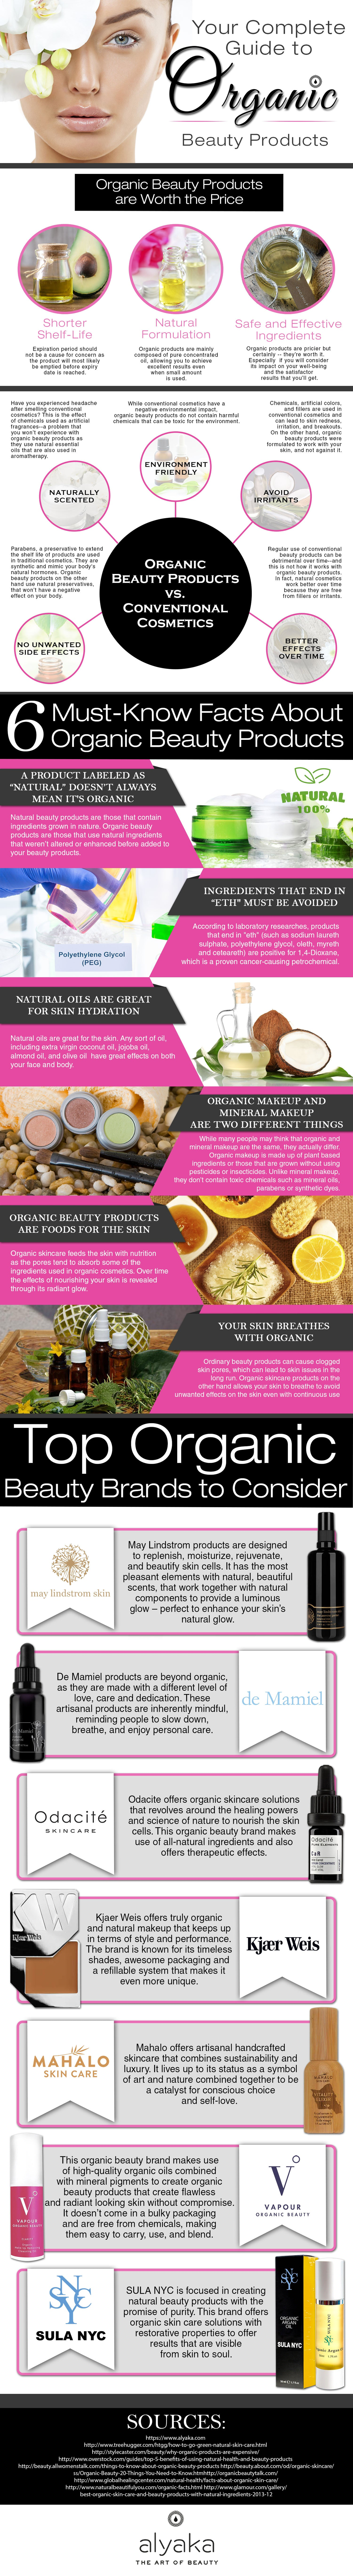 organic beauty guide